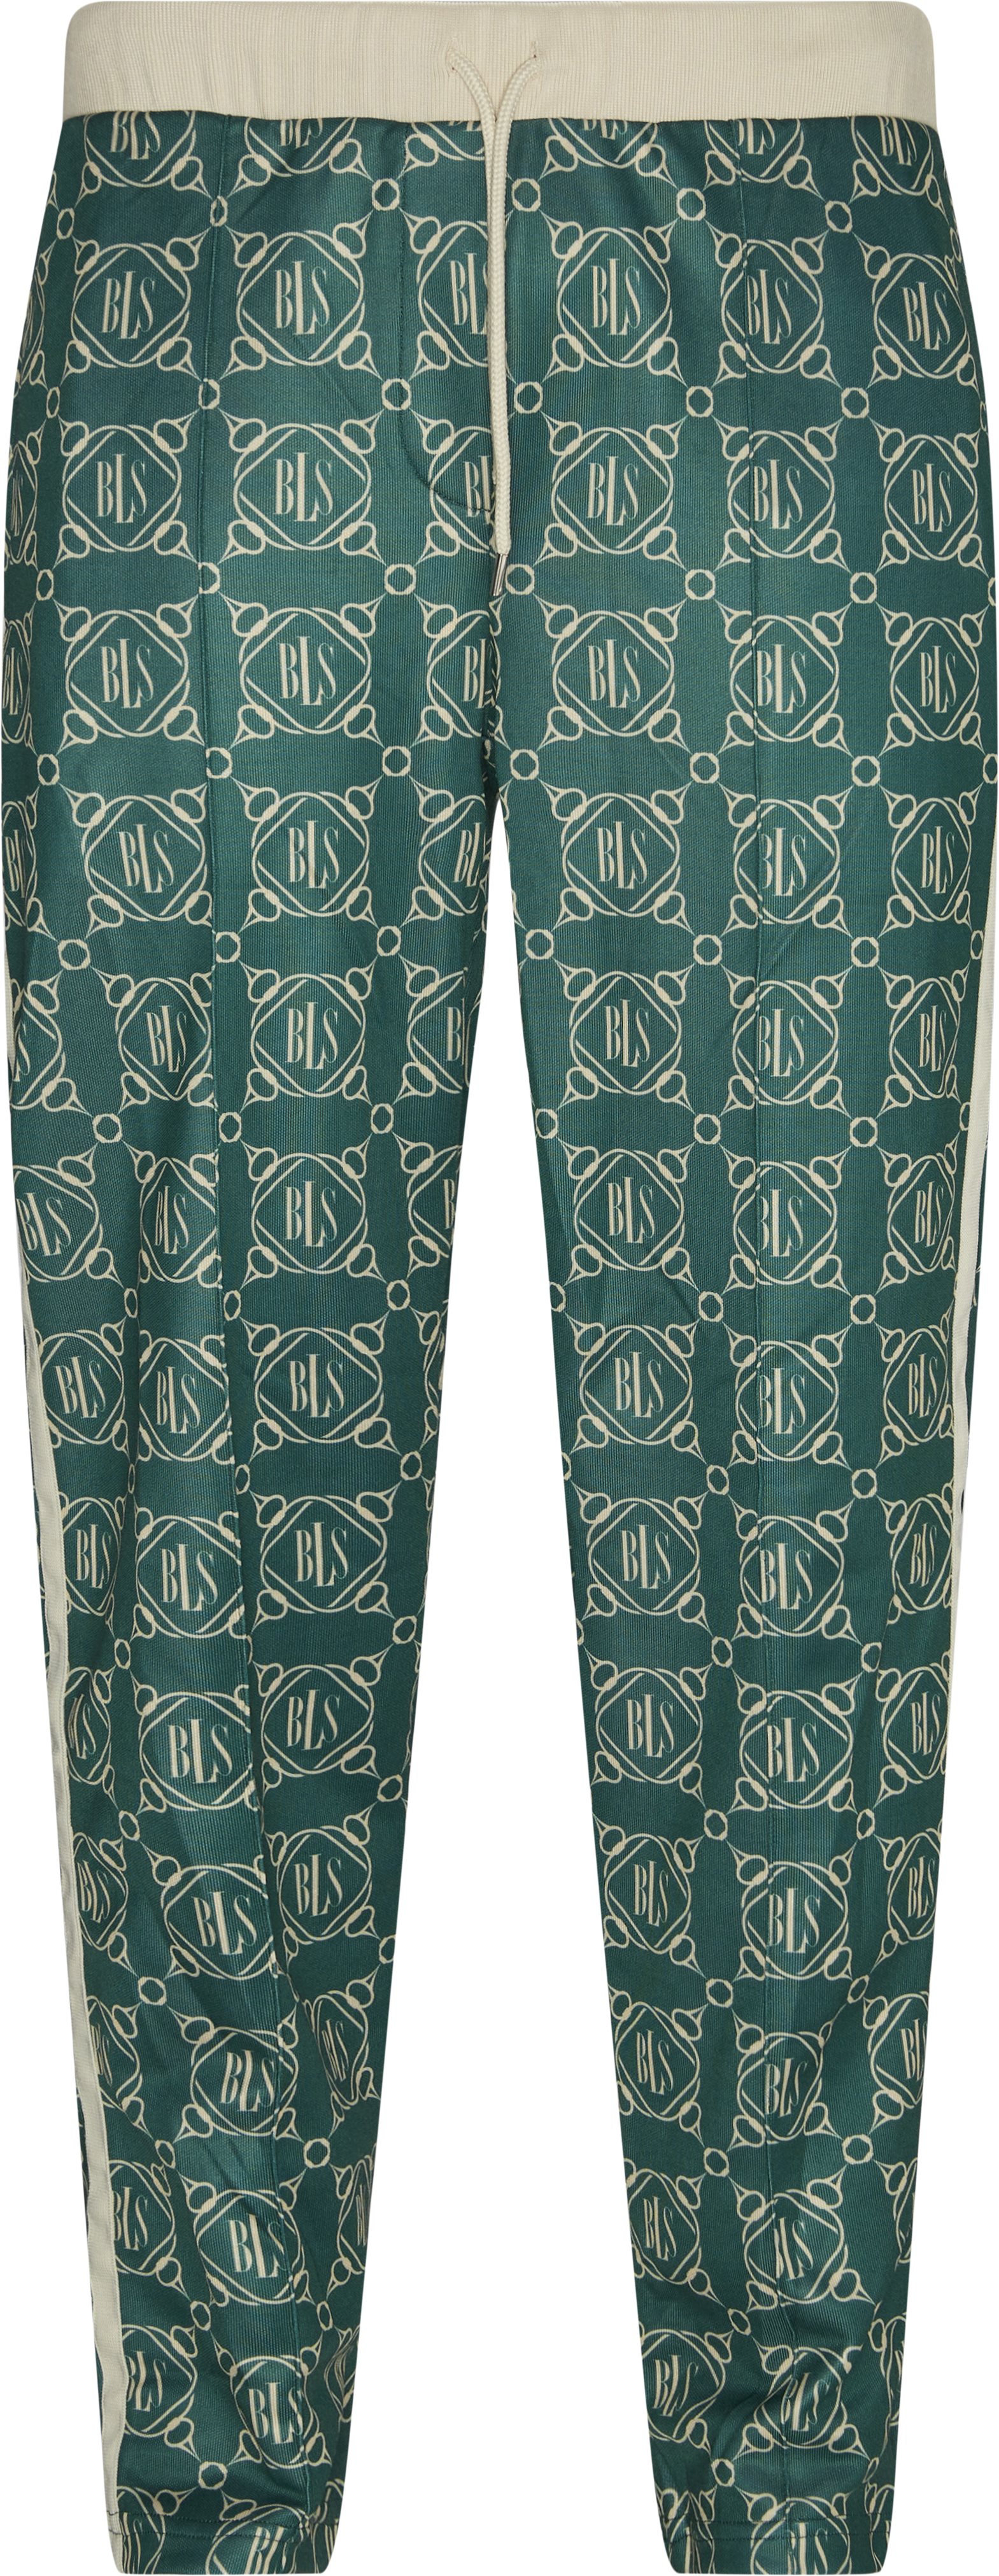 Martinez Dome Pants - Bukser - Regular fit - Grøn